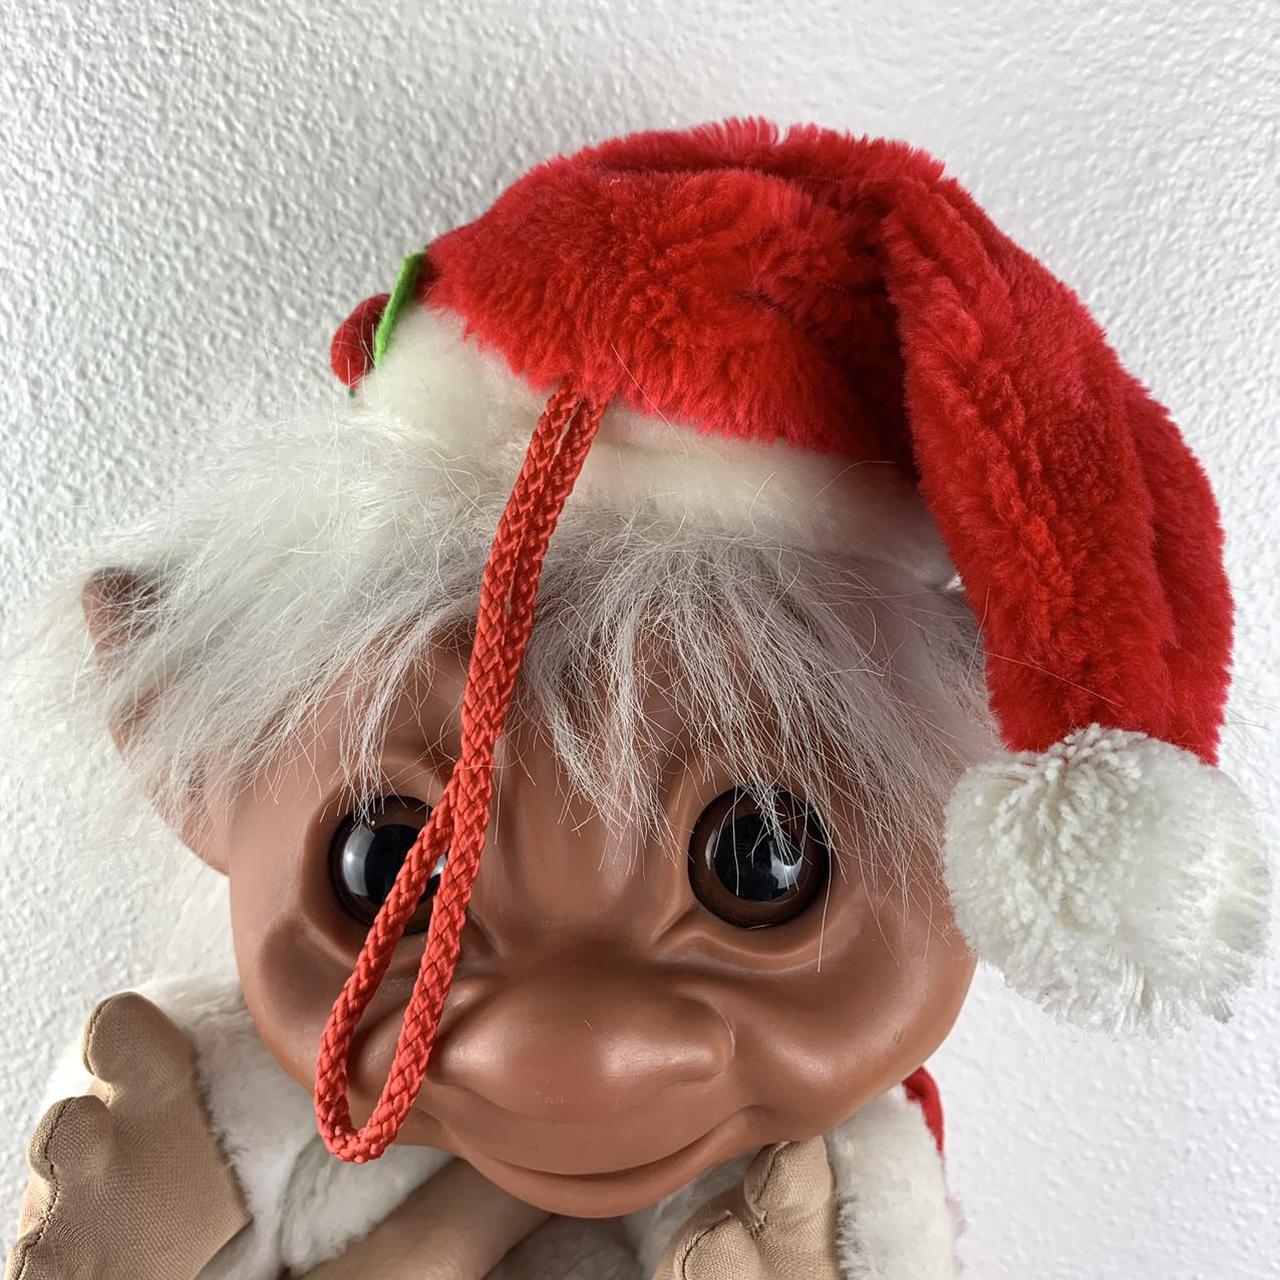 Christmas Stocking - Inspired by Trolls Movie